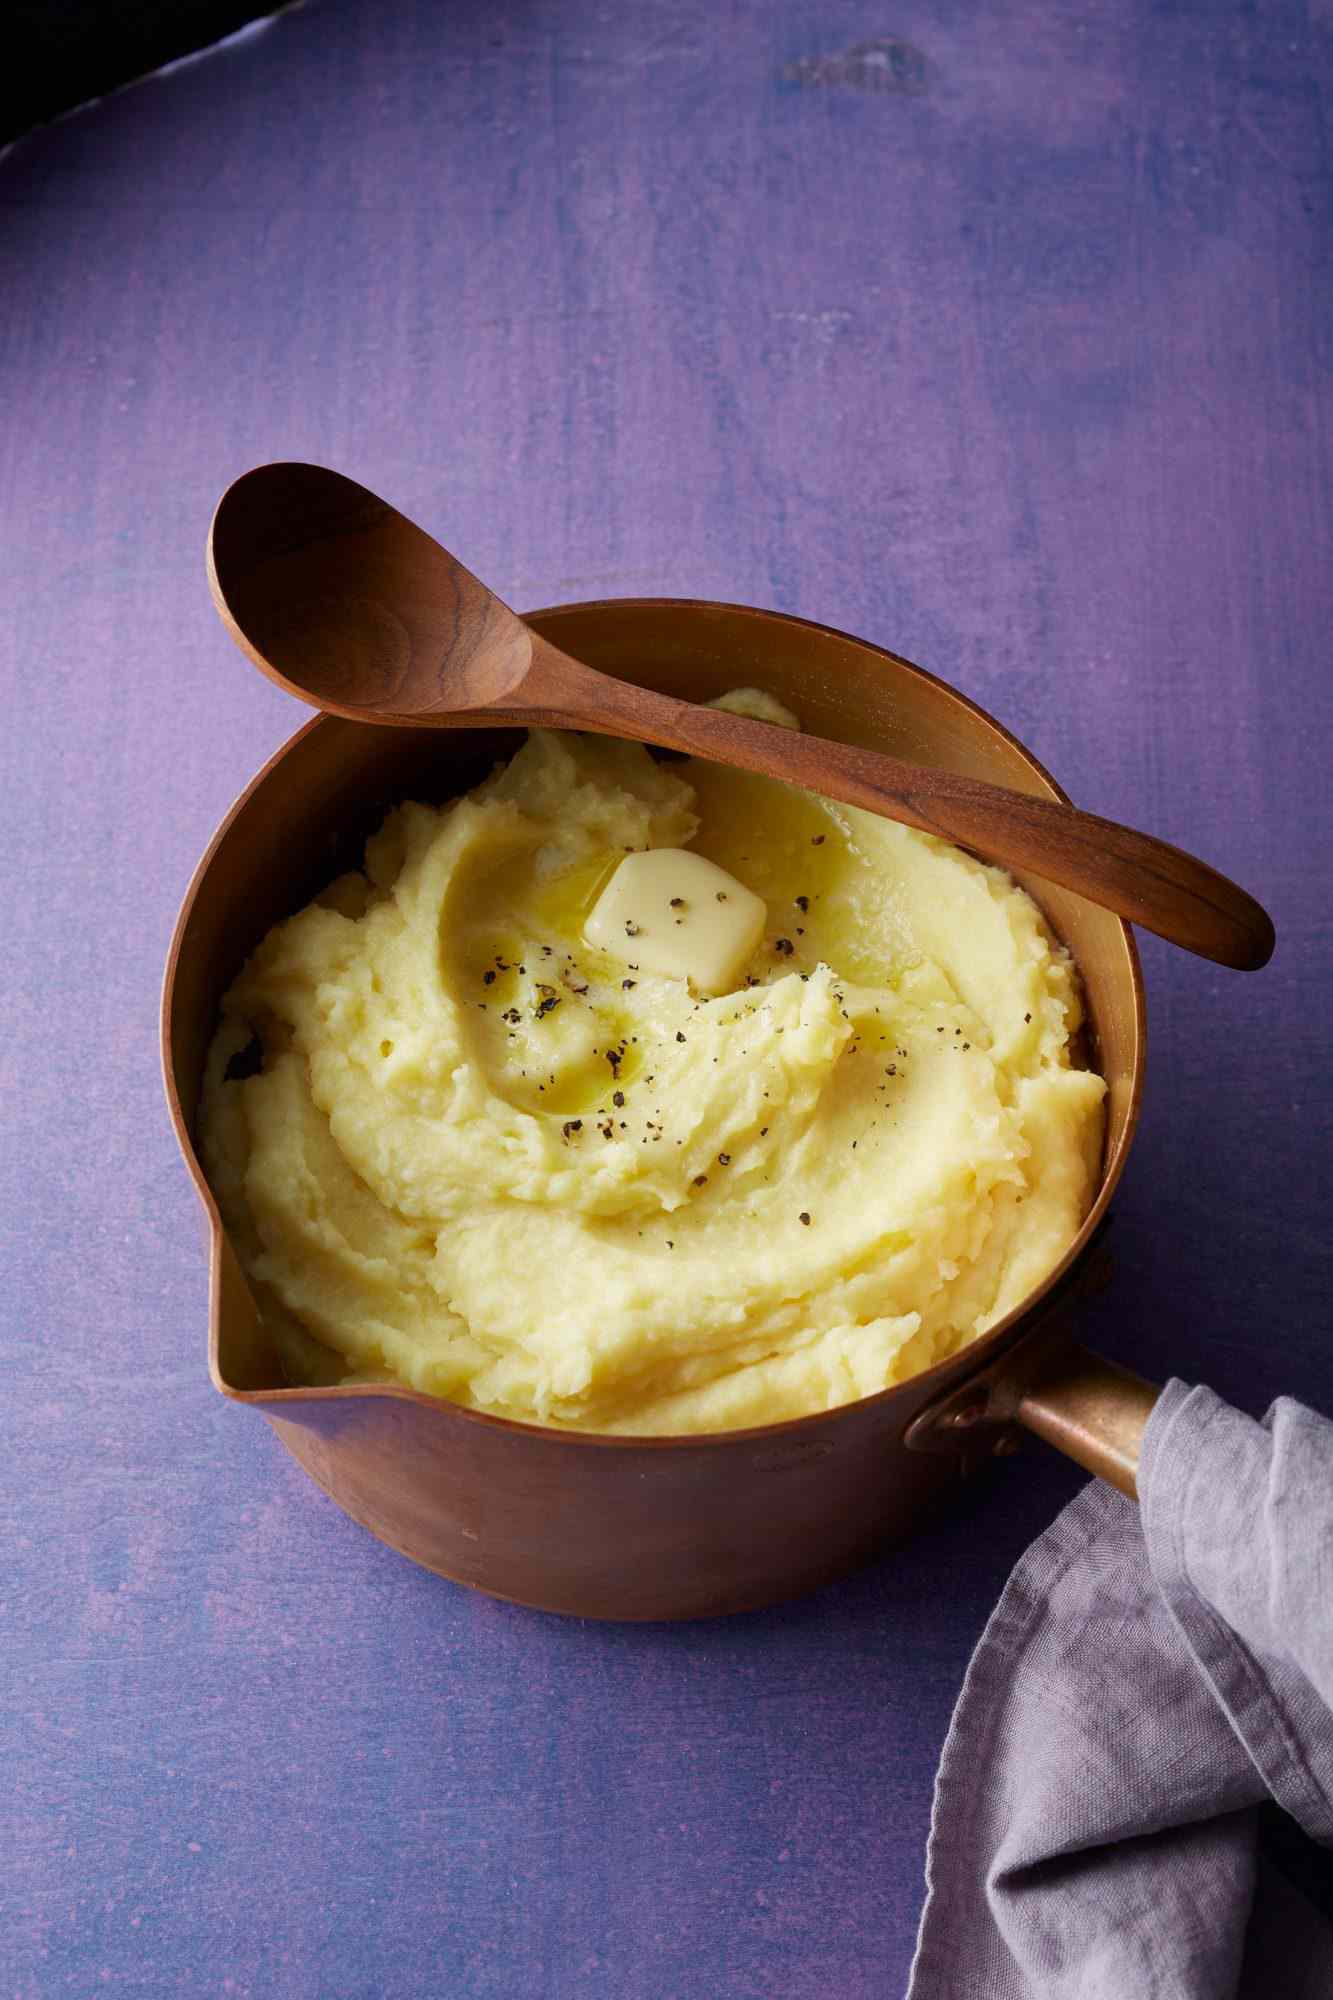 test kitchen's garlic-thyme mashed potatoes